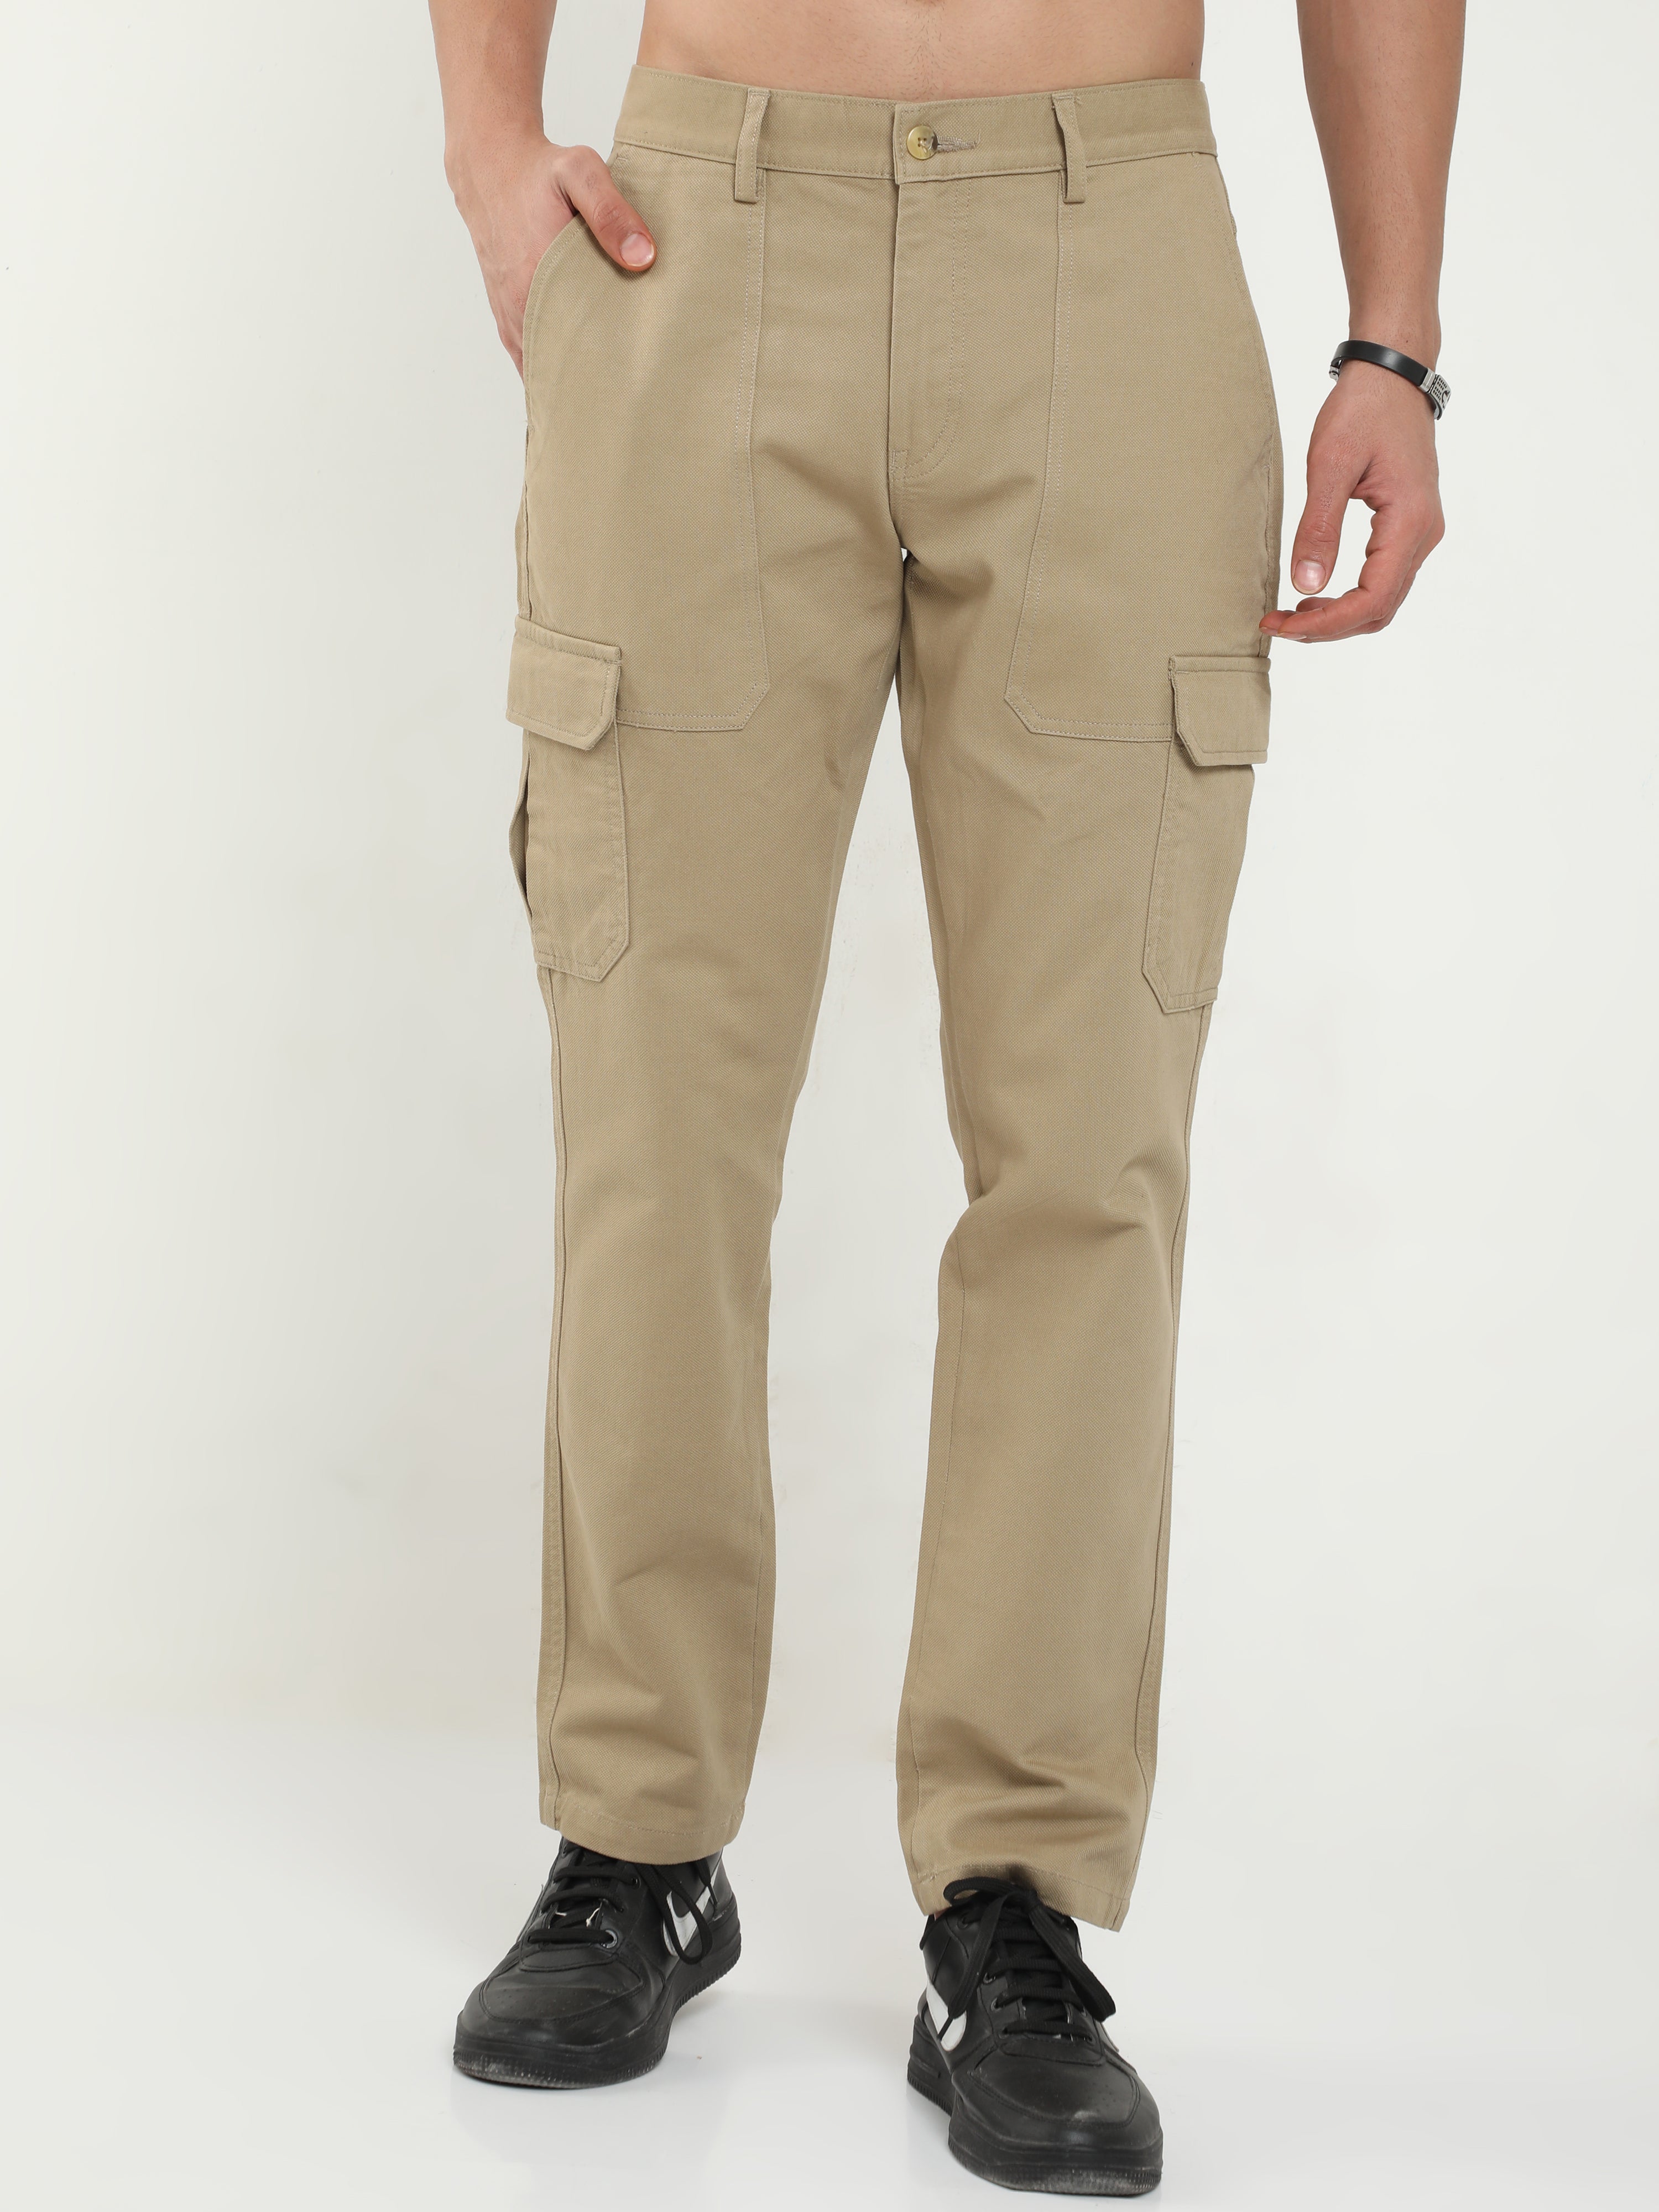 Buy t-base Men's Brown Regular Fit Cargo Pants for Men Online India